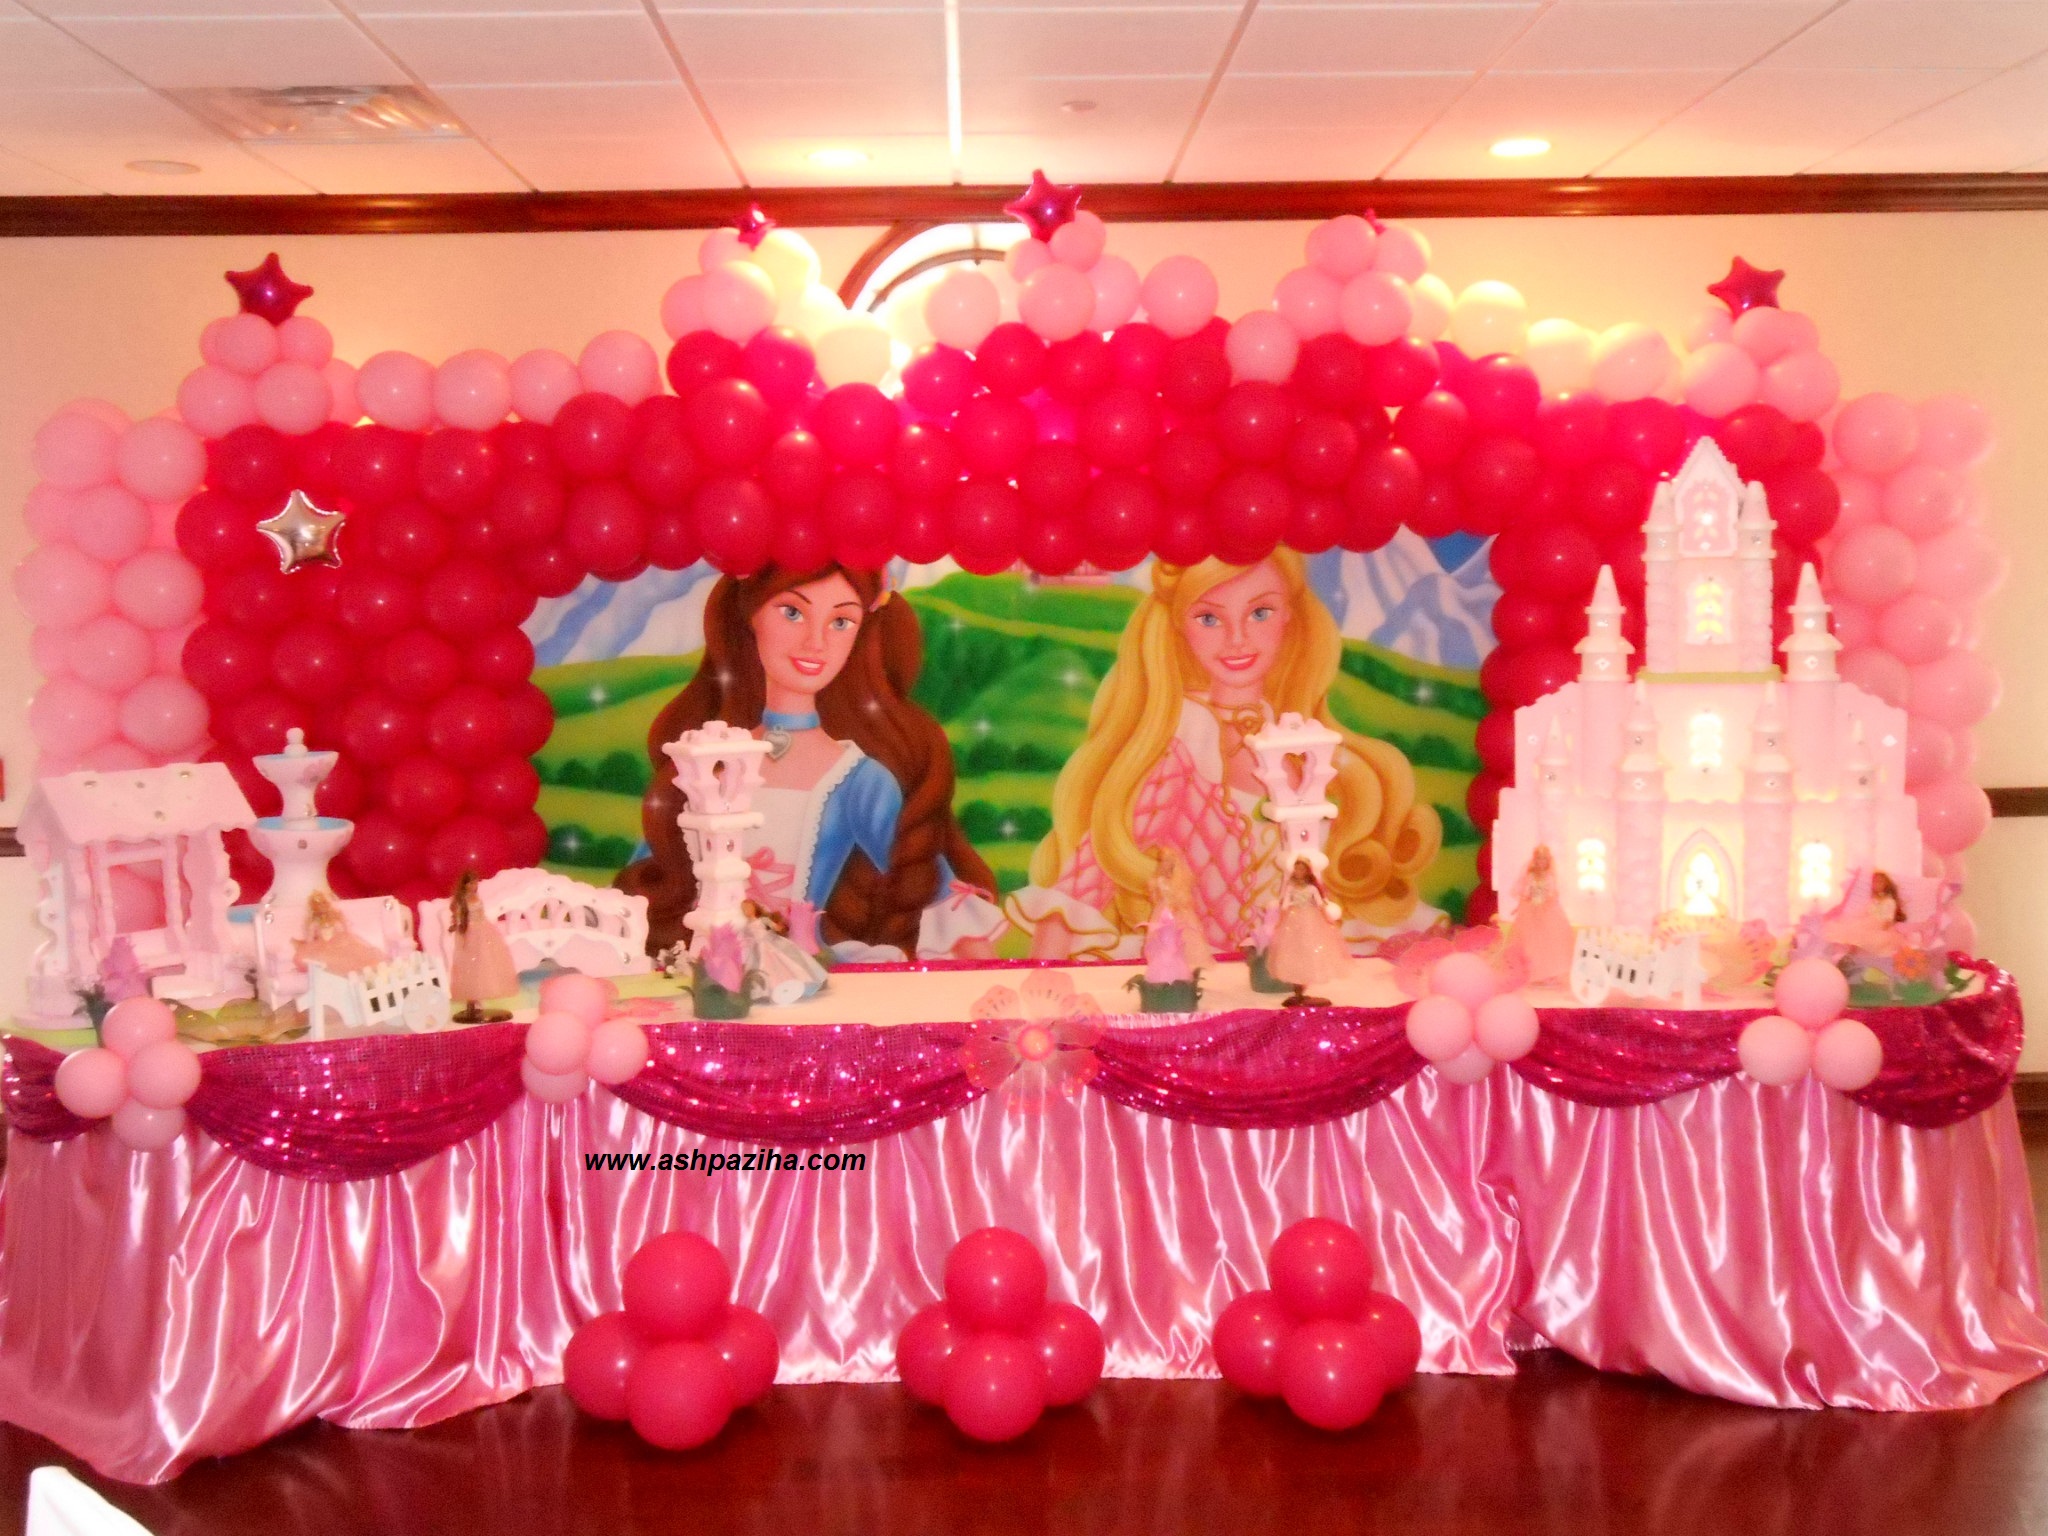 Decorations - birthday - Themes - Princess (8)